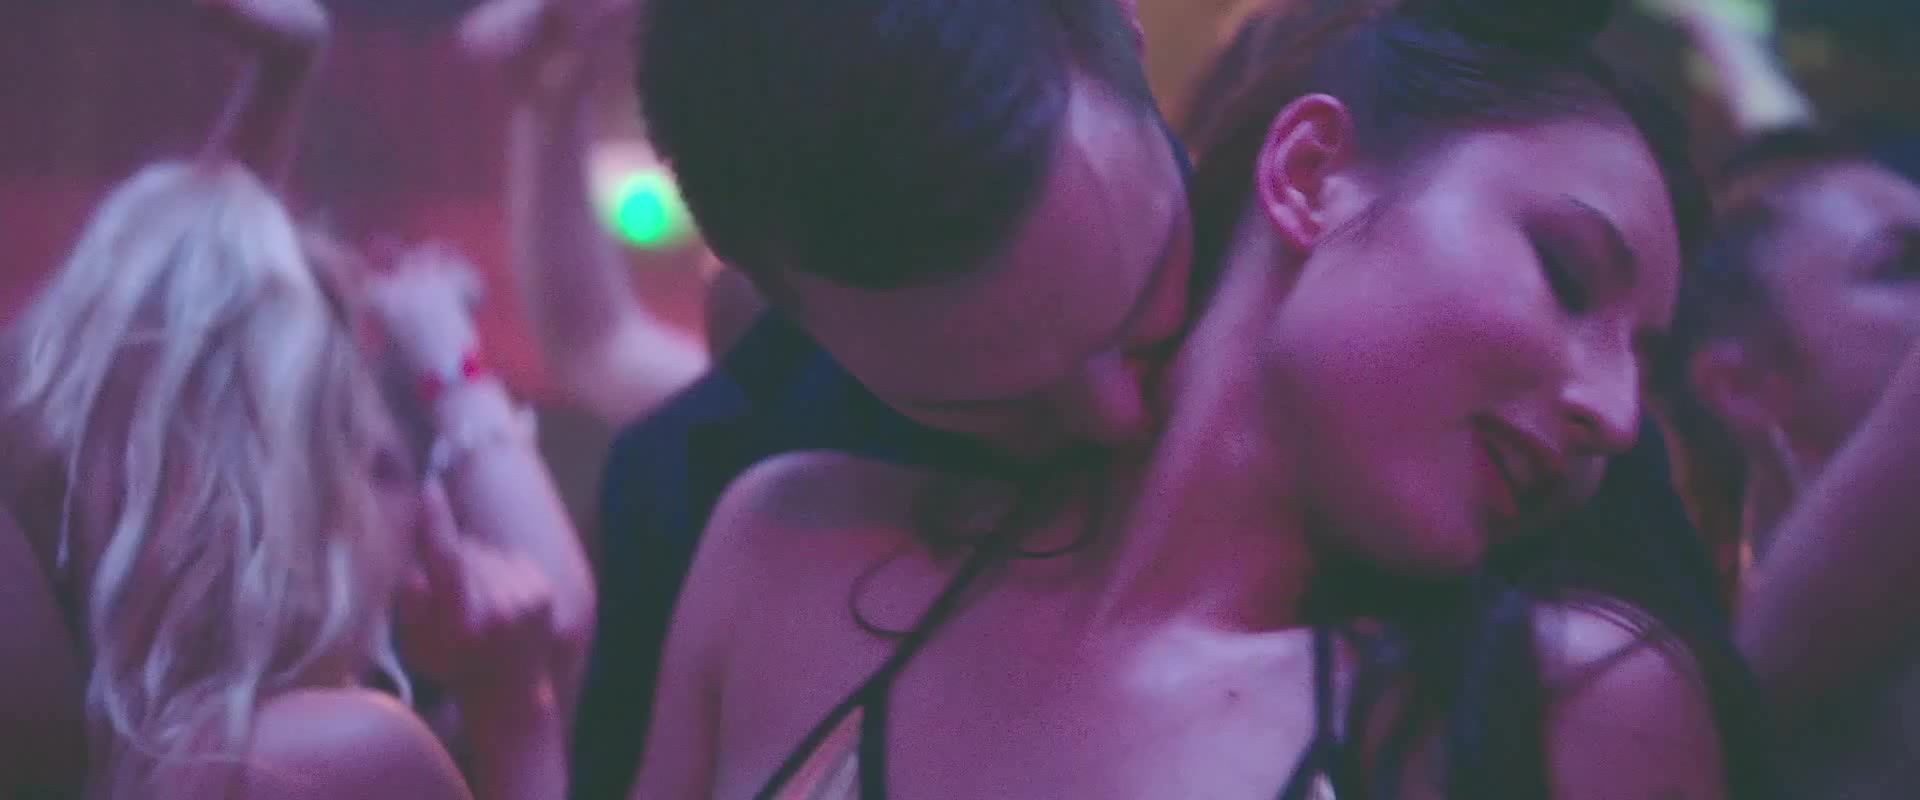 Cfnm Sex video Georgia King nude - Kill Your Friends (2015) RealLifeCam - 1